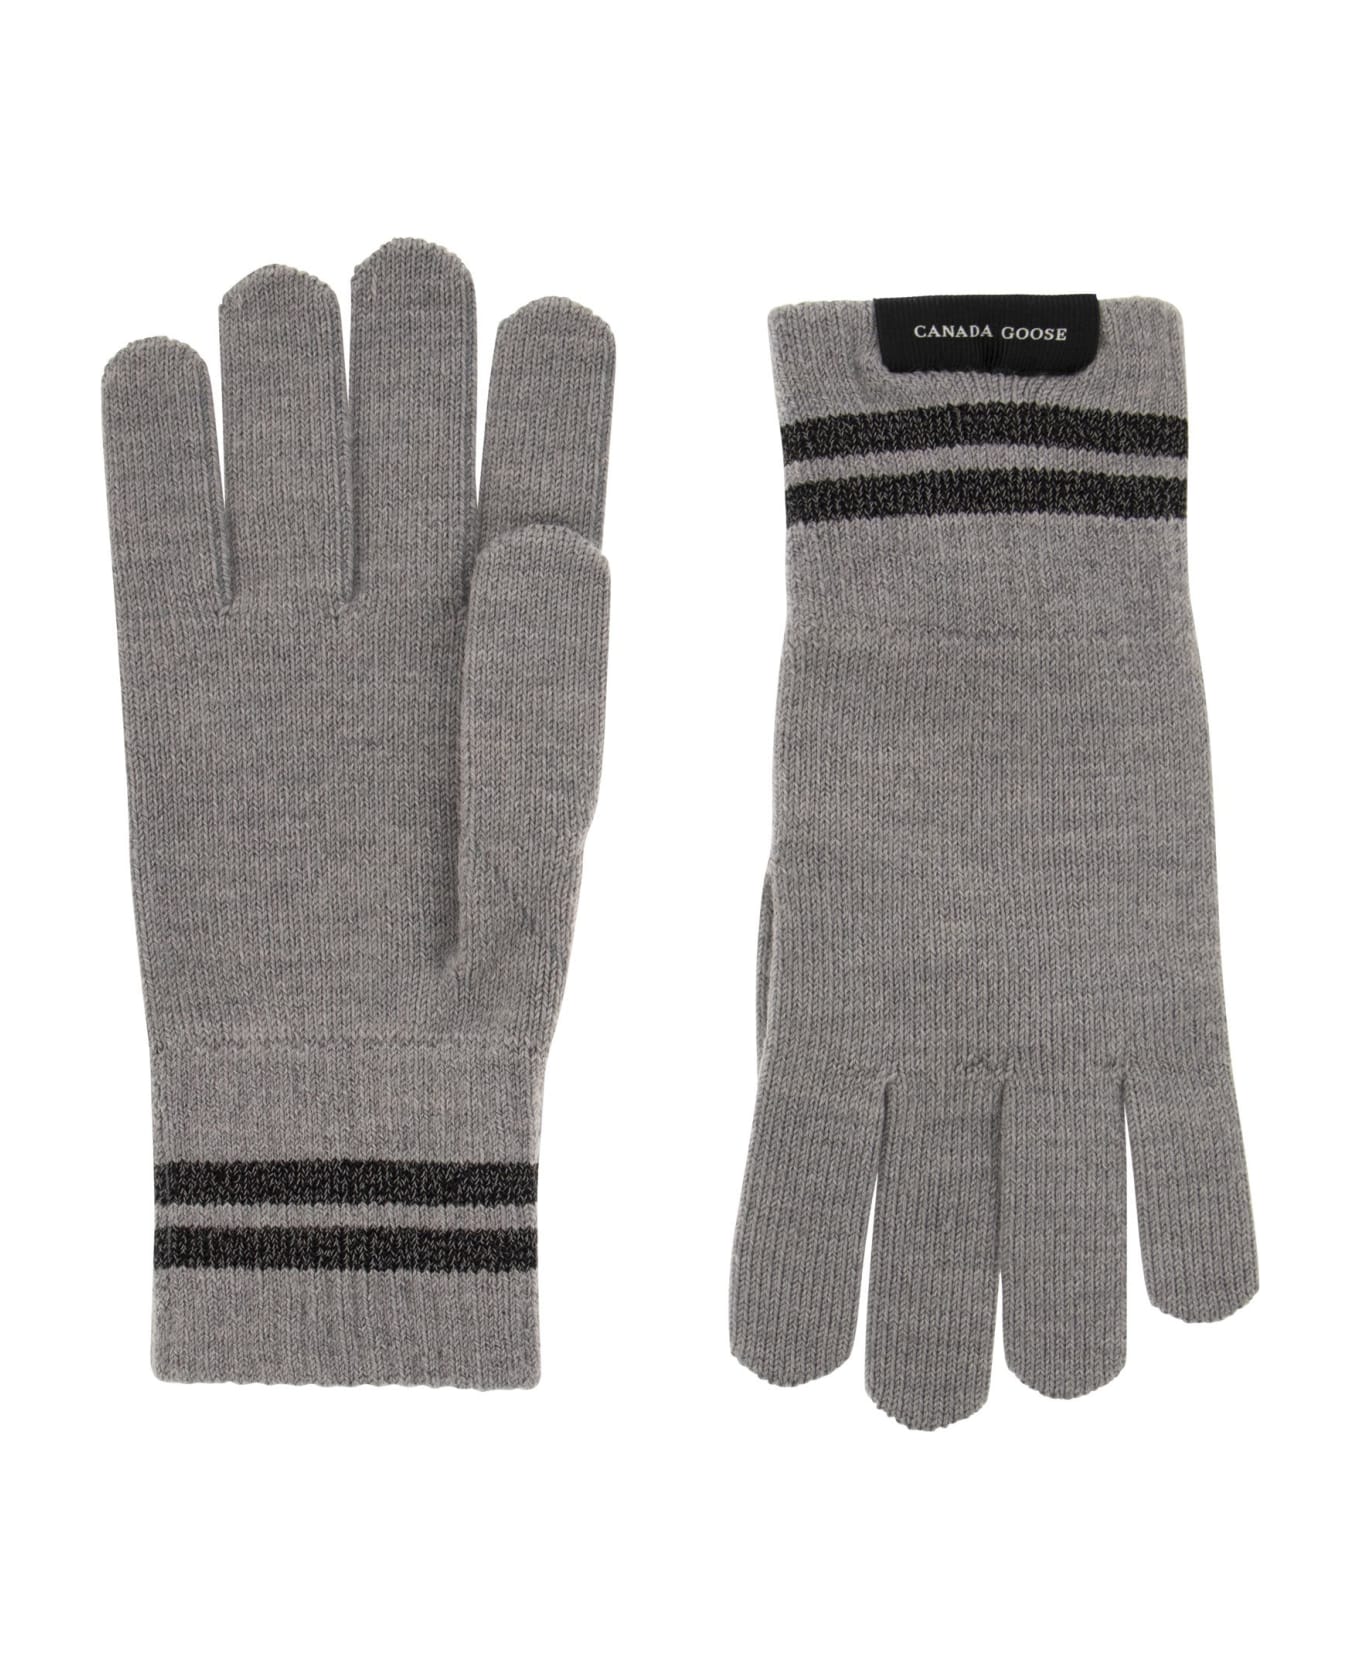 Canada Goose Wool Barrier Glove - Grey